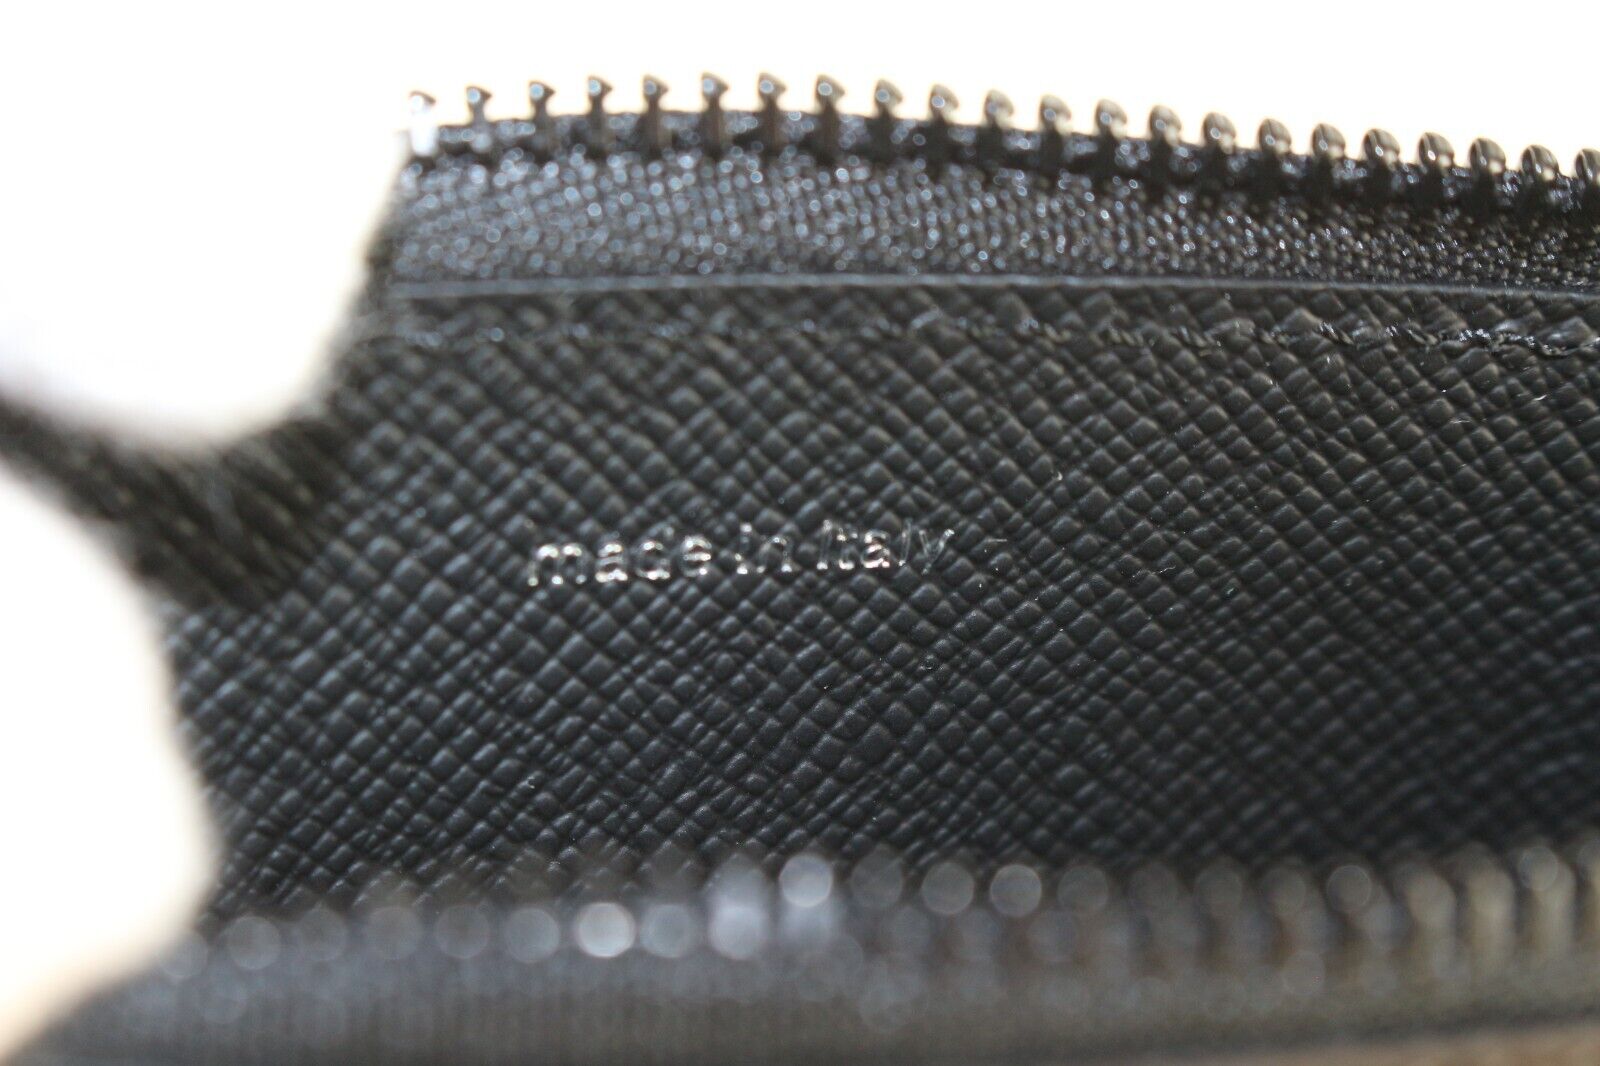 Louis Vuitton x Yayoi Kusama Pochette Cle Monogram Eclipse Black/Silver